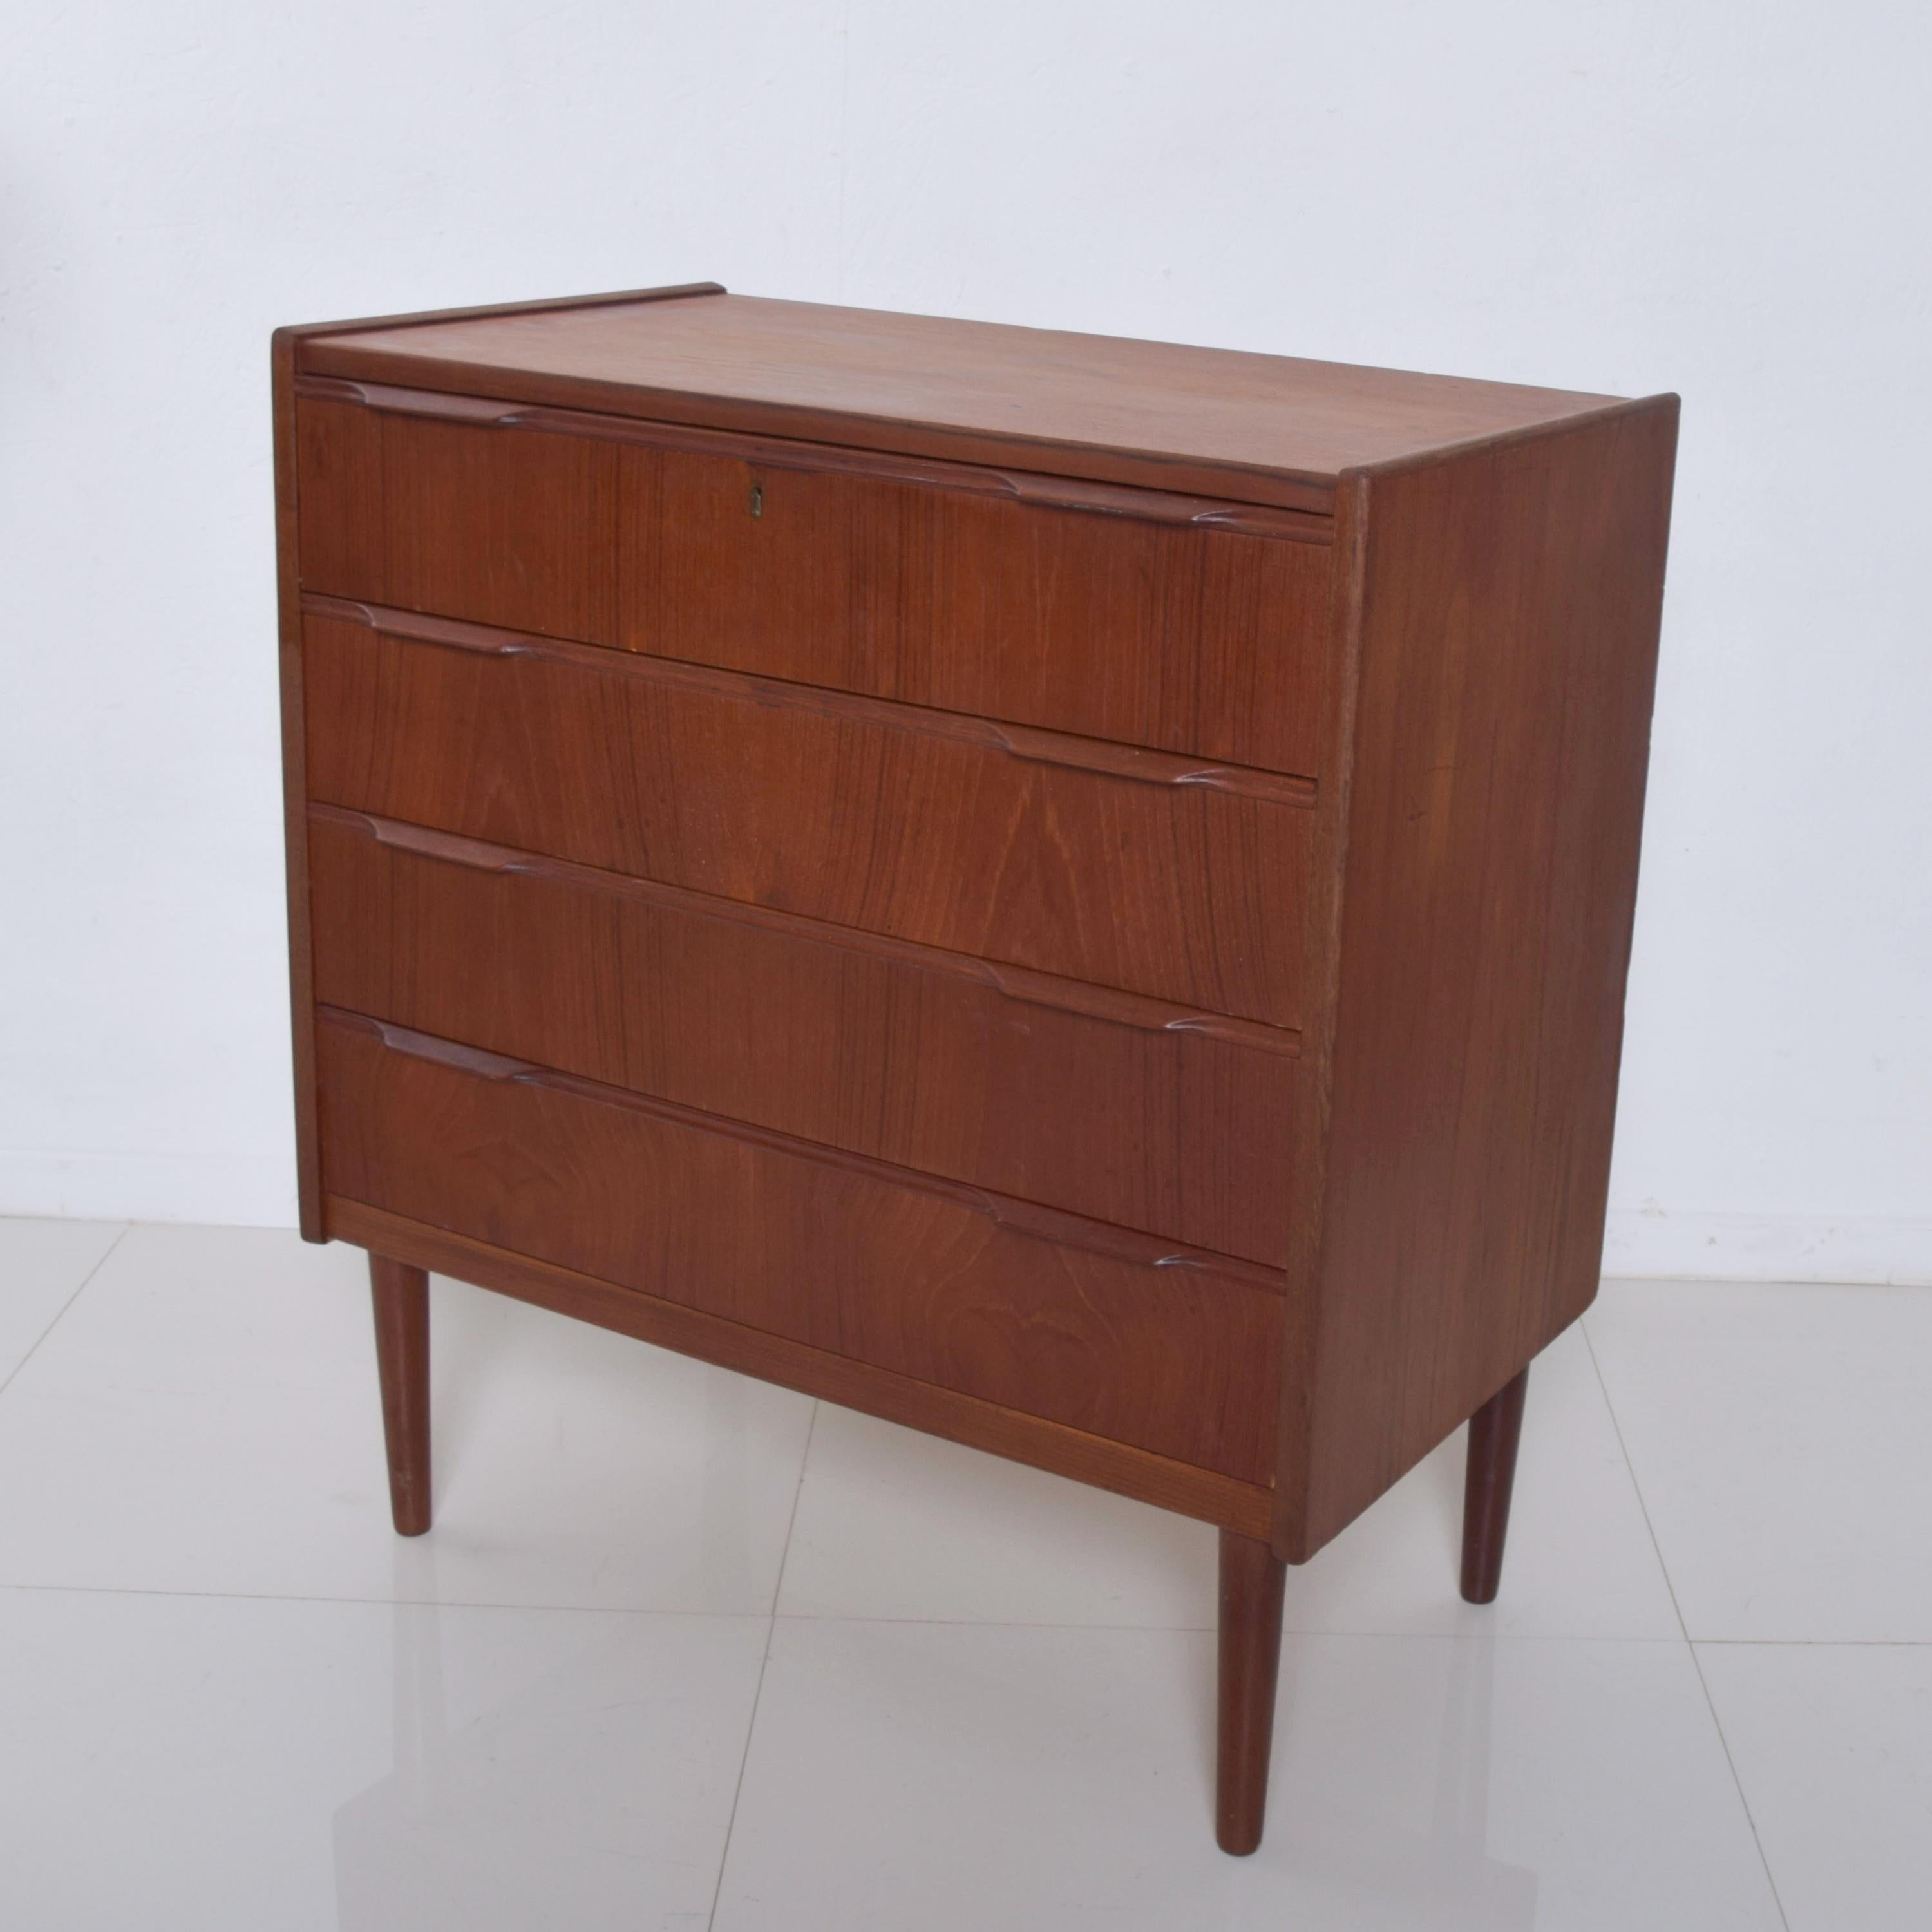 Midcentury Modern Denmark Stylish Vintage Dresser Chest of Four Drawers in Teak Wood 
31 1/2